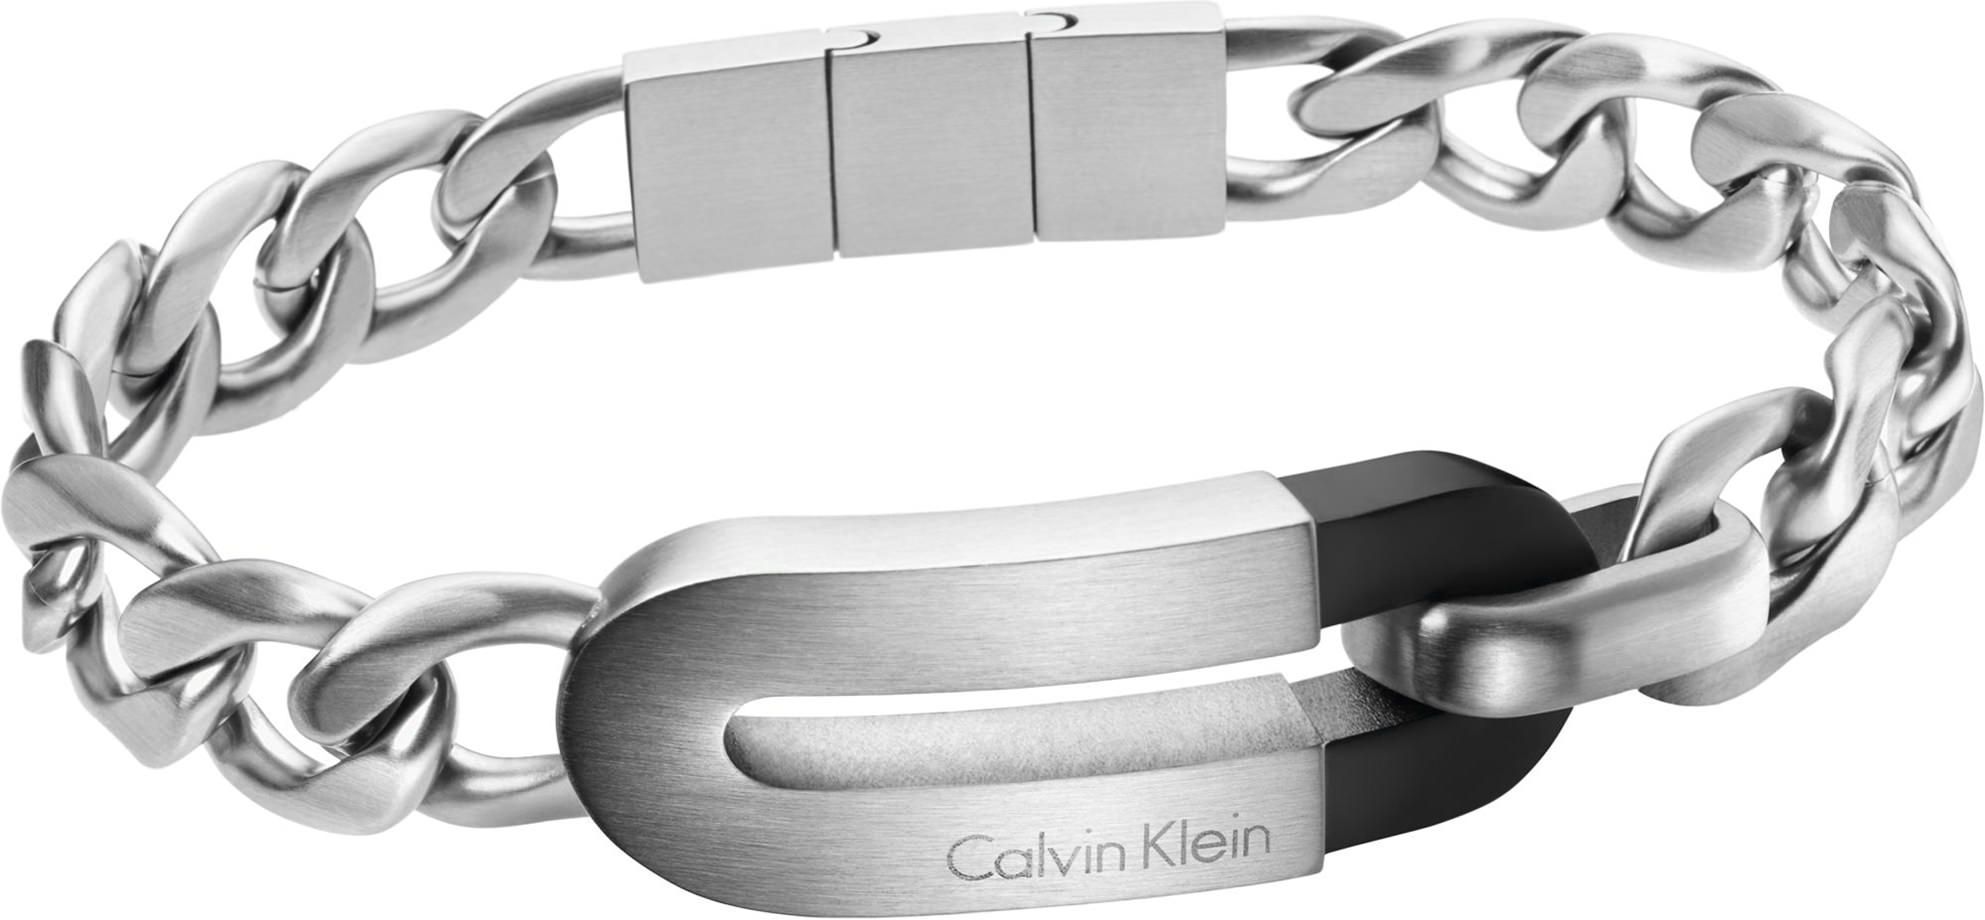 Calvin Klein SUB 300T Clive Cussler Bracelet For Men - 1